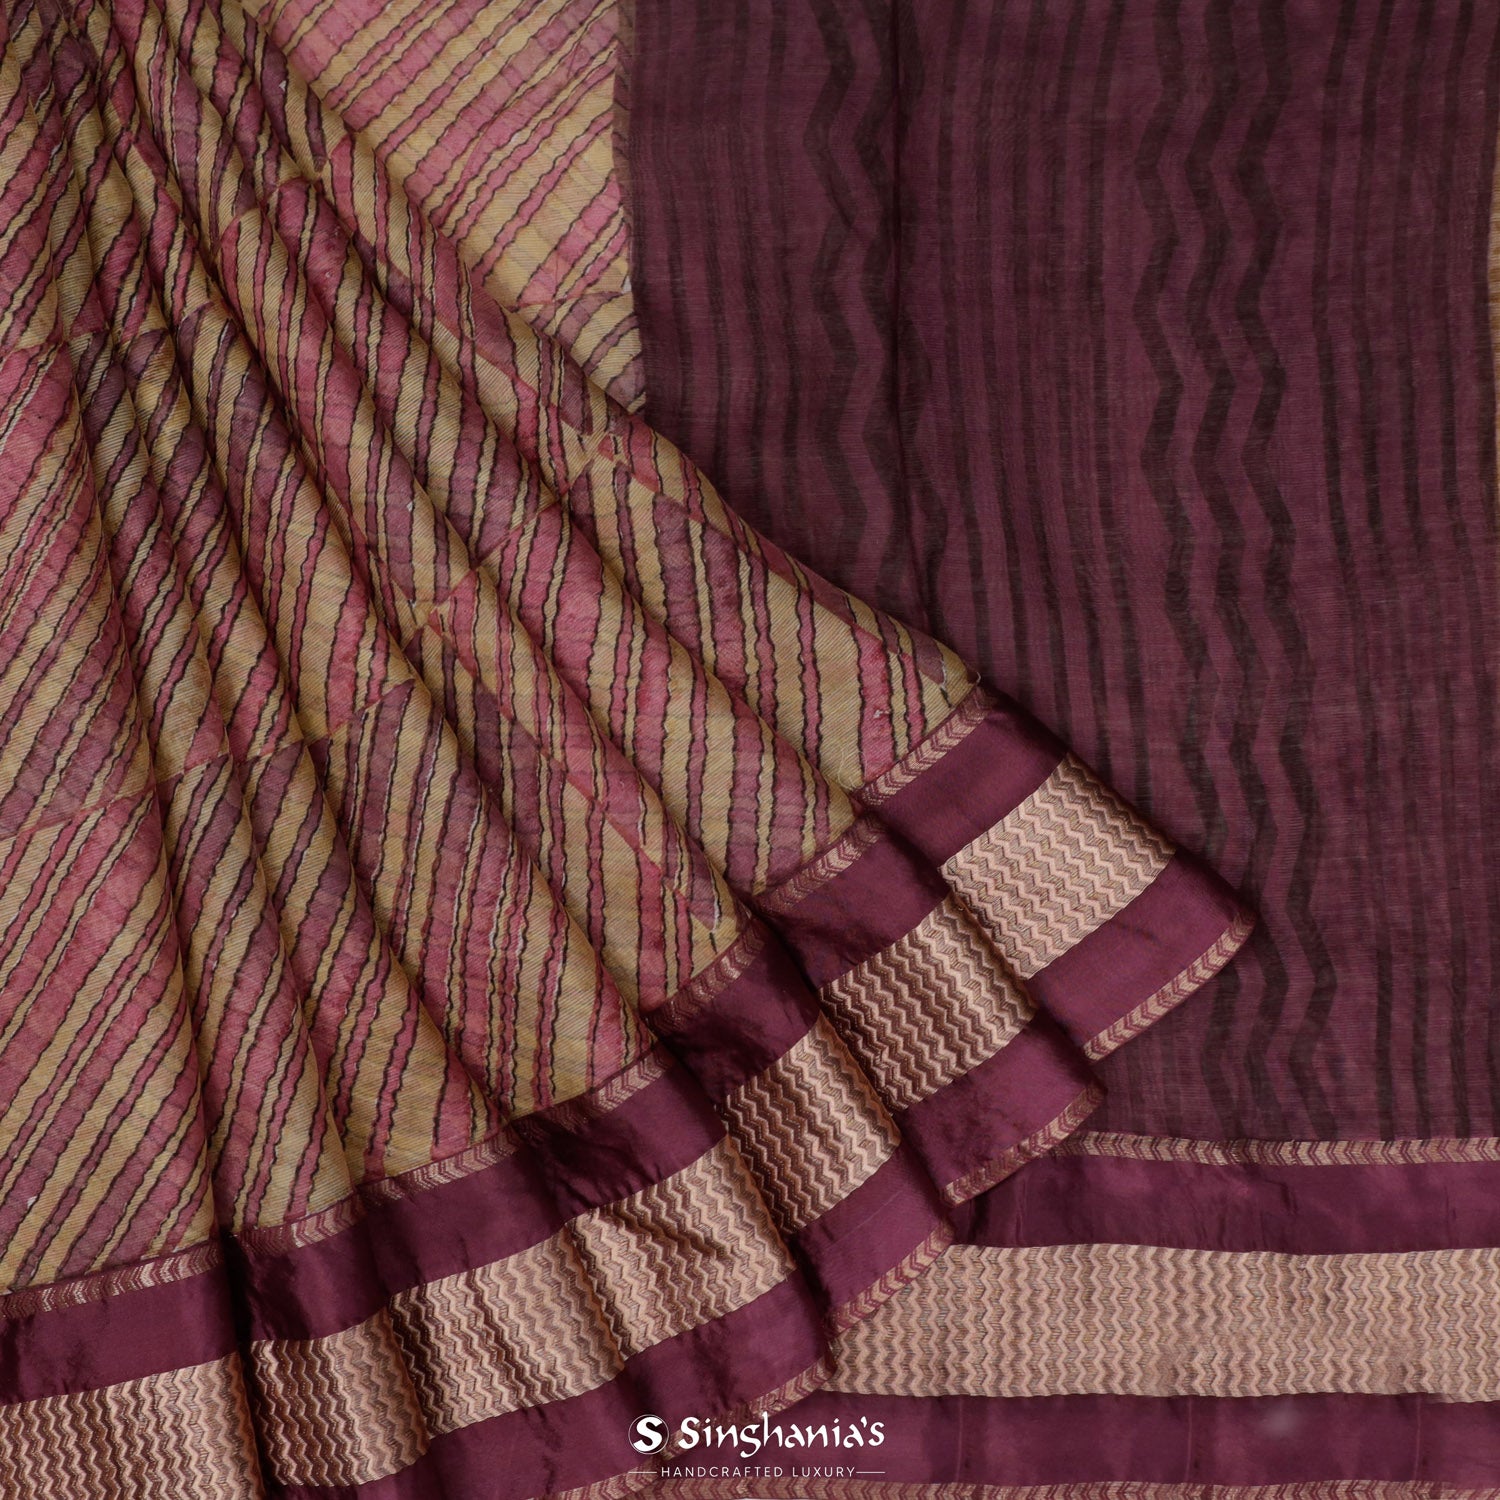 Sand Yellow Printed Maheshwari Saree With Checks And Diagonal Stripes Pattern